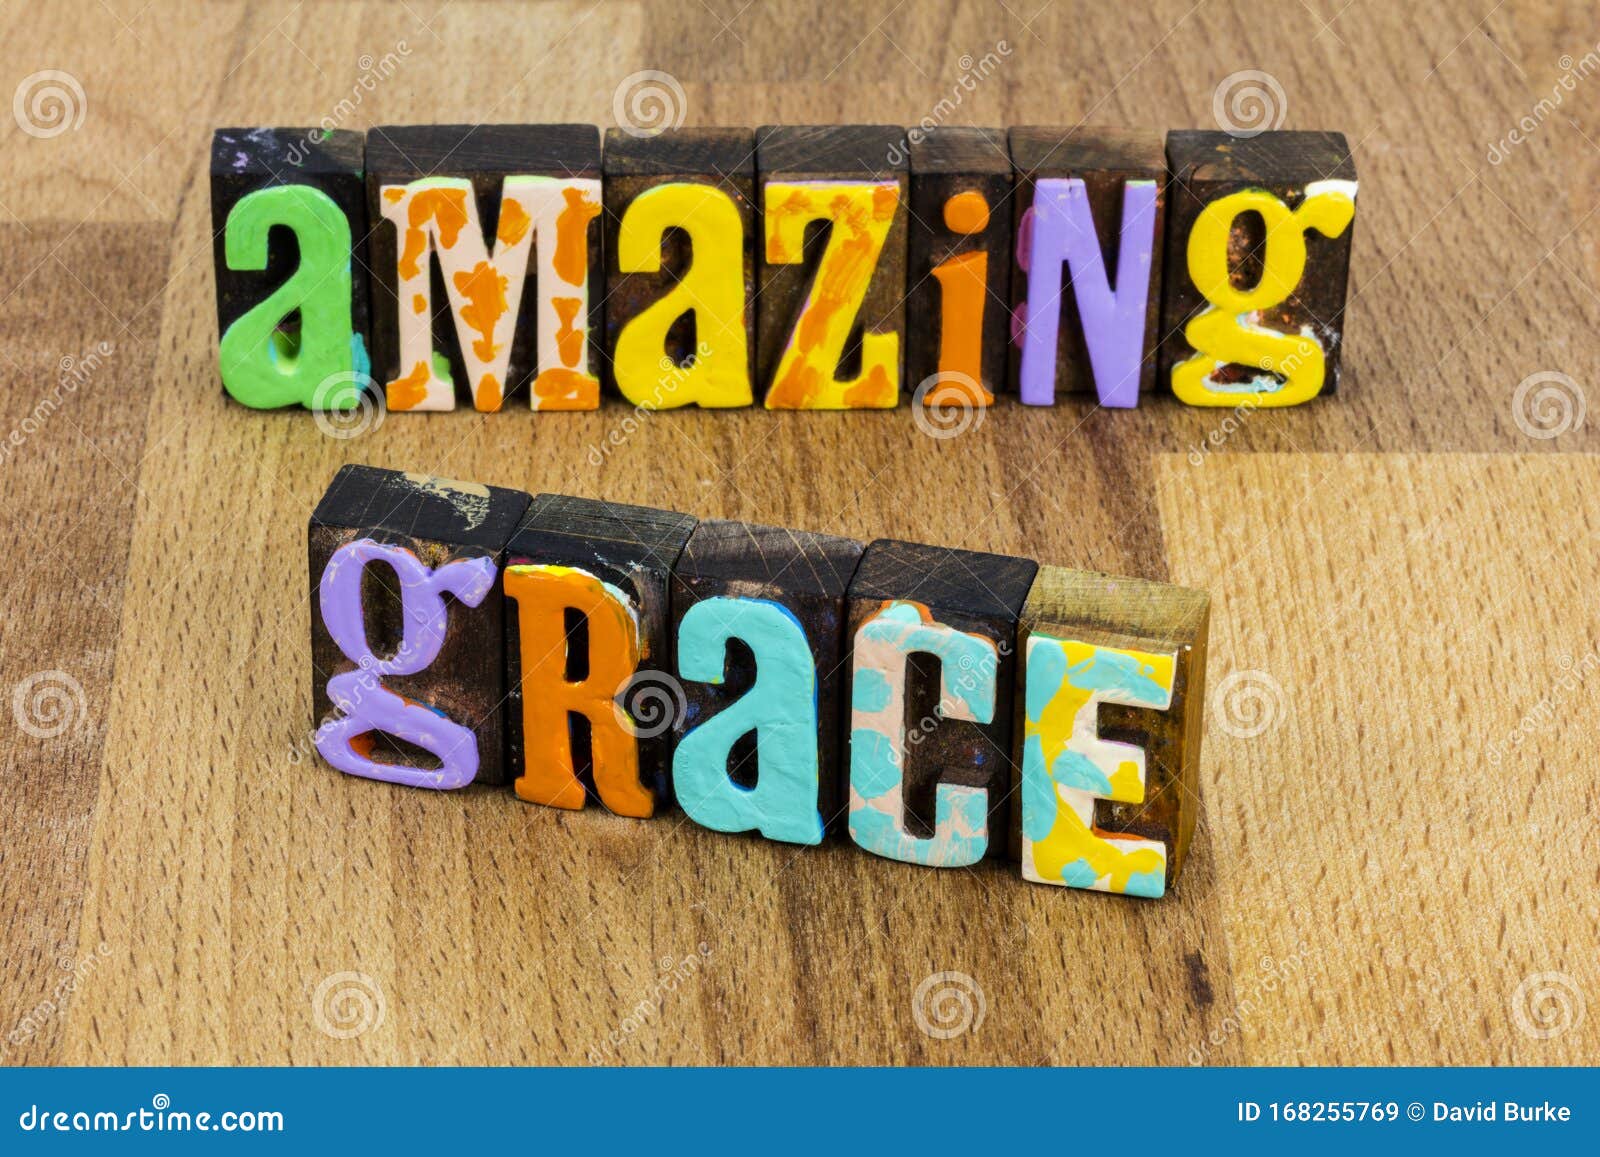 amazing grace christian religion faith grateful child god love